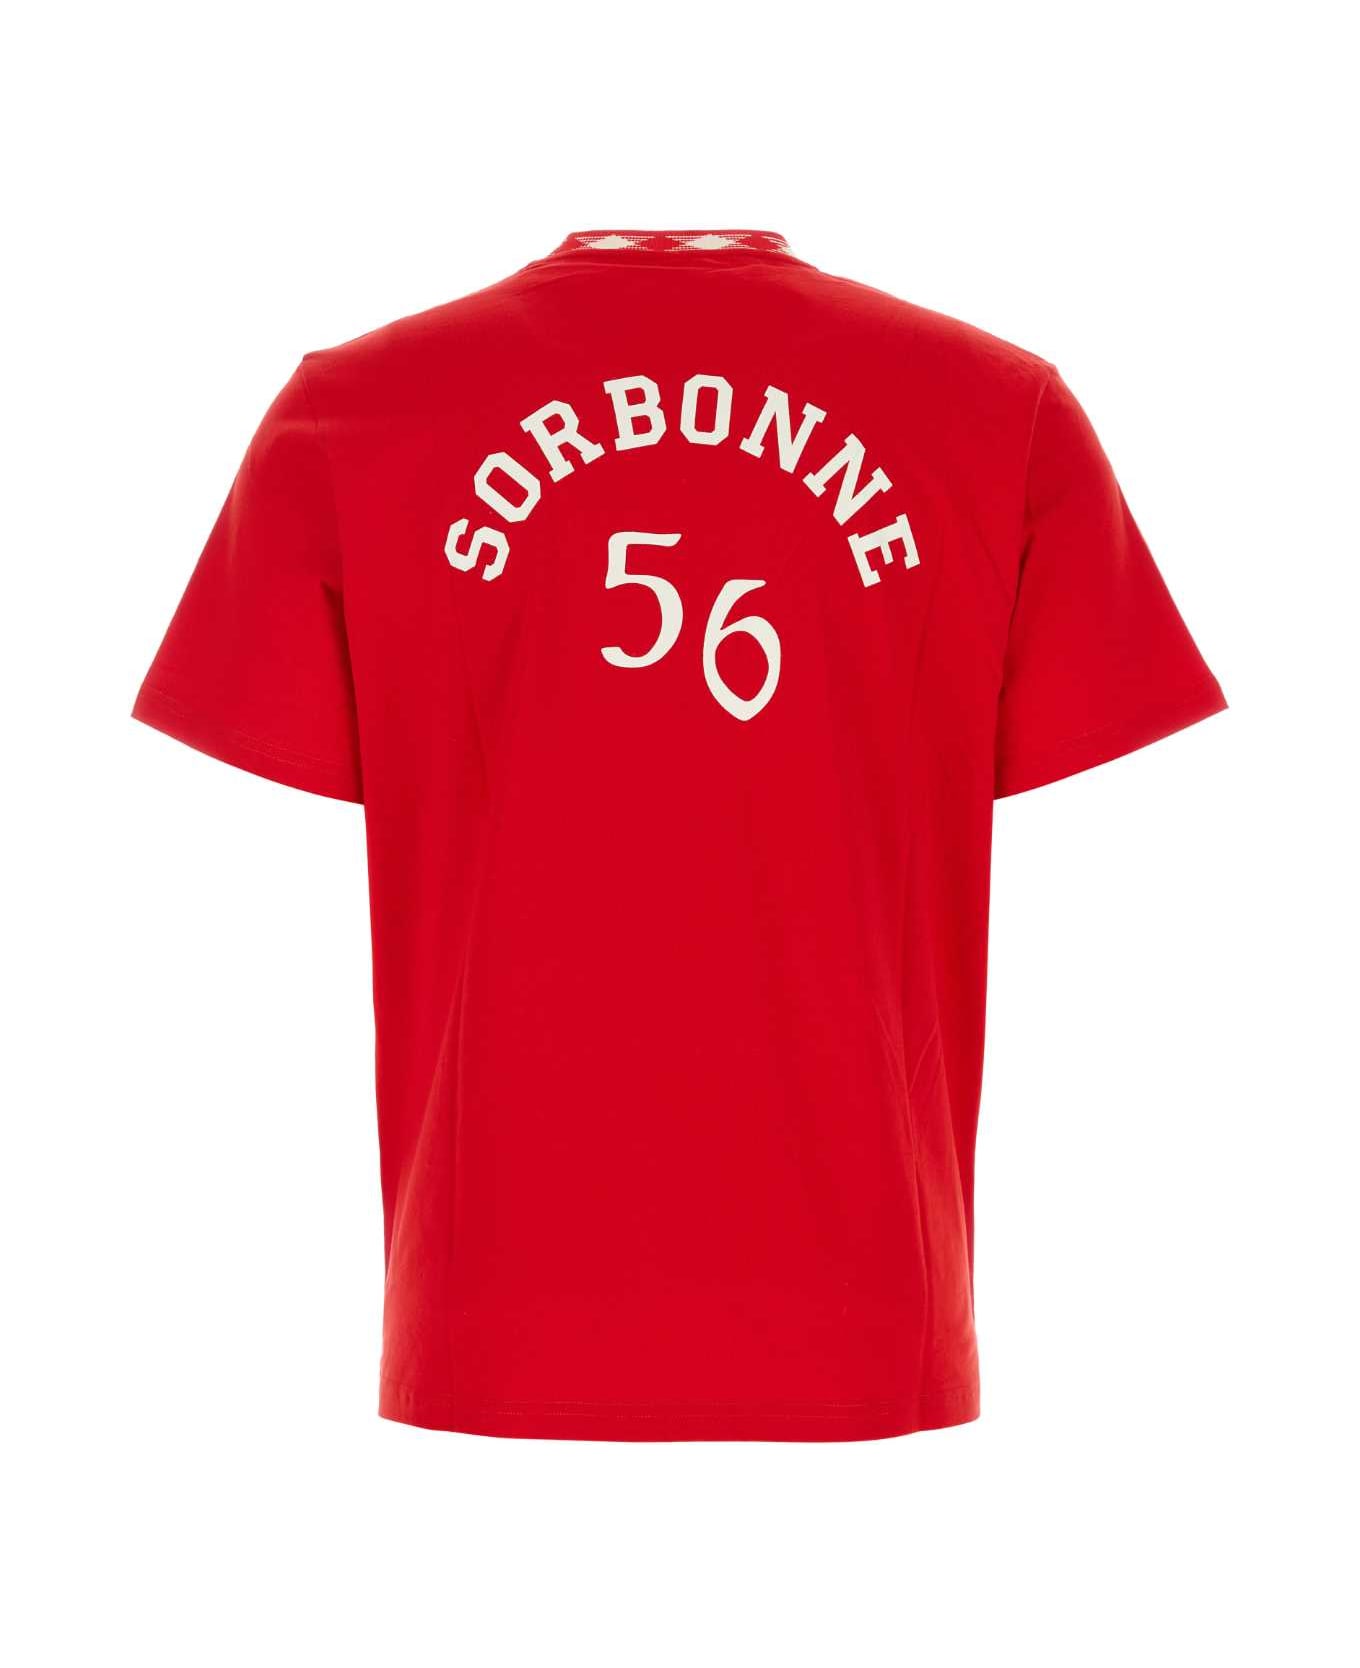 Wales Bonner Red Cotton Sorbonne 56 Oversize T-shirt - RED